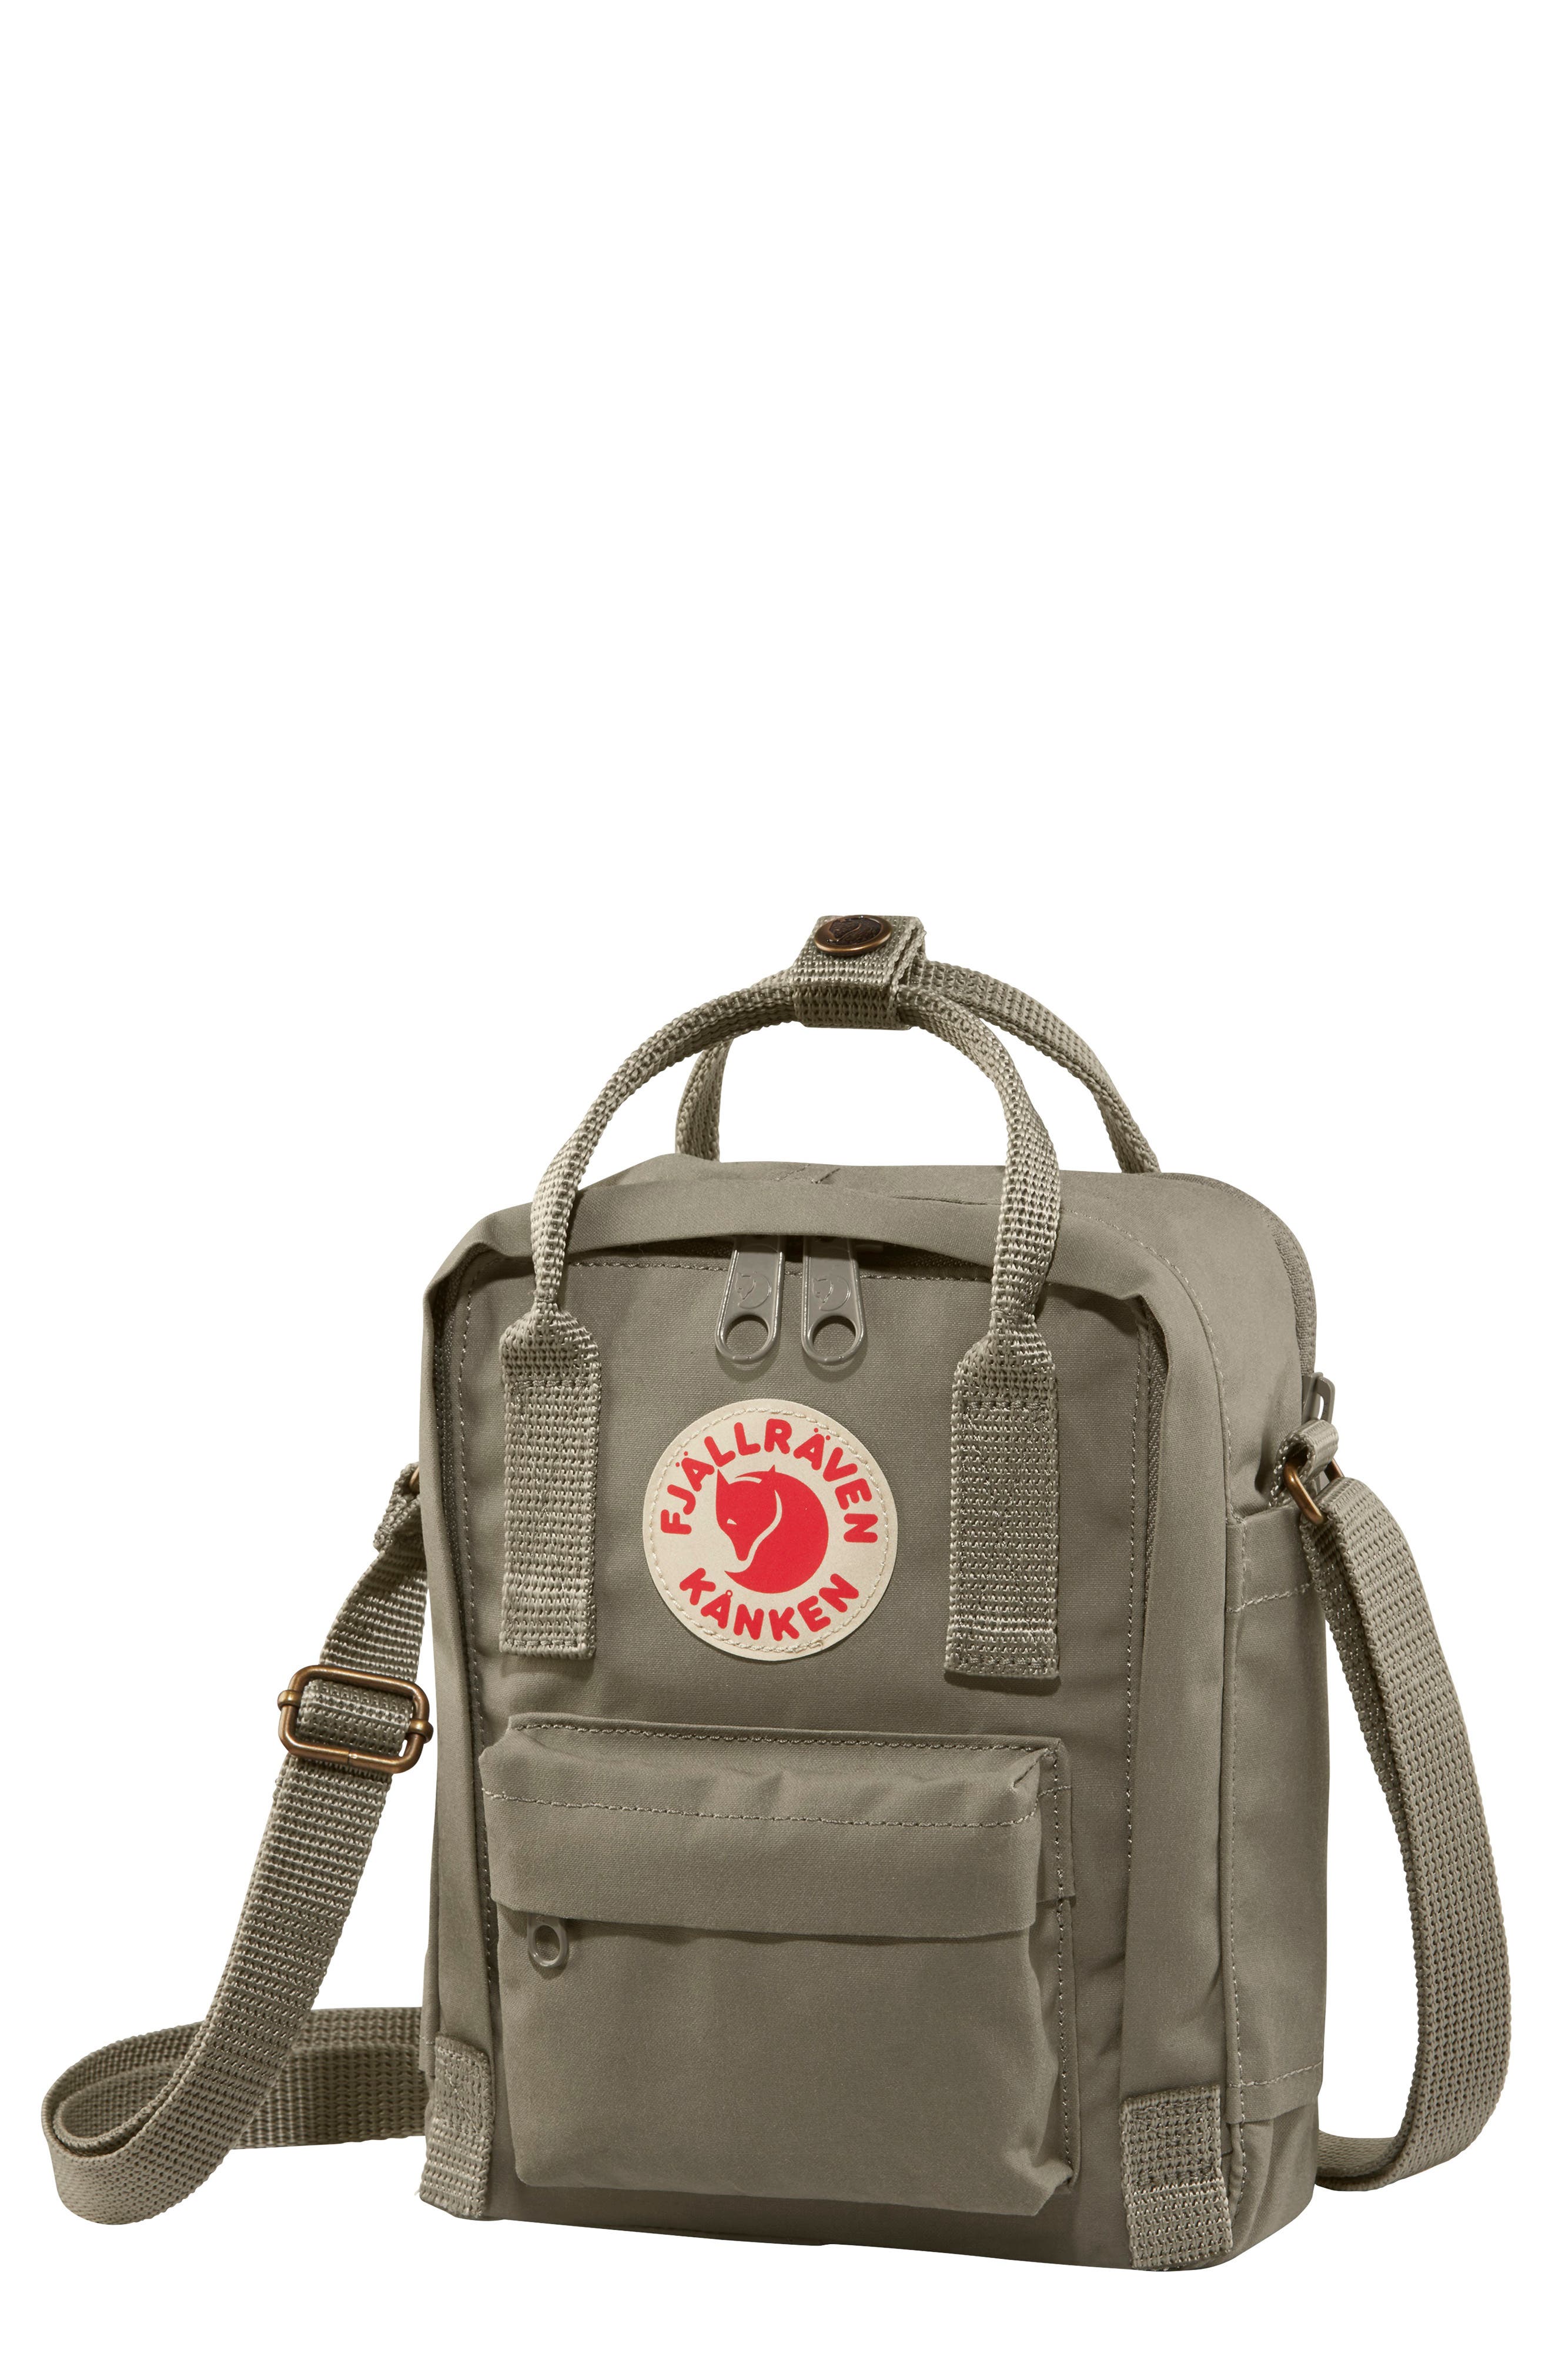 2019 Hot sale mens travel bags cool Canvas bag fashion men messenger bags crossbody bag handbags 